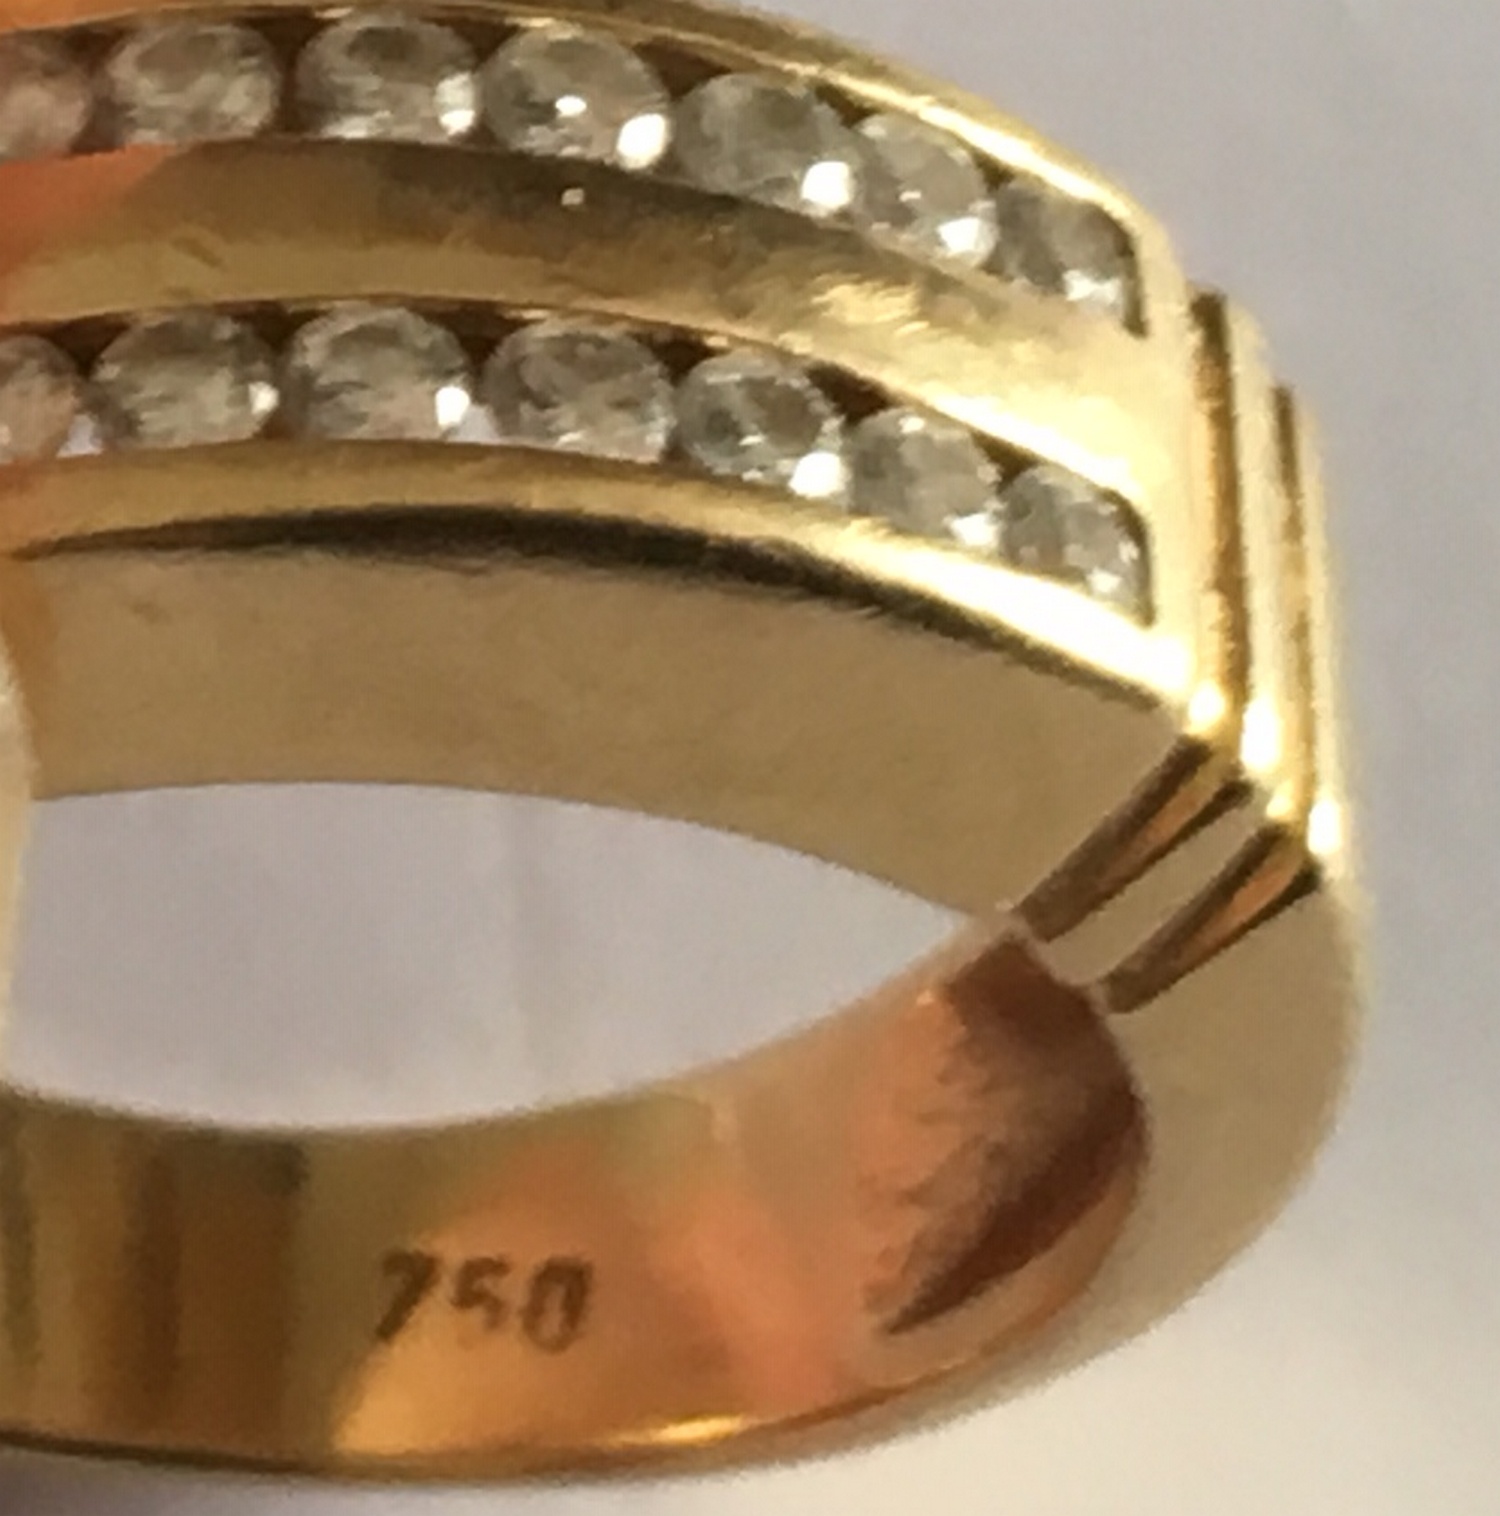 18 karat Gold Ring set with 20 diamonds - UK size L 1/2 - 8.4 grams total weight. - Image 4 of 5